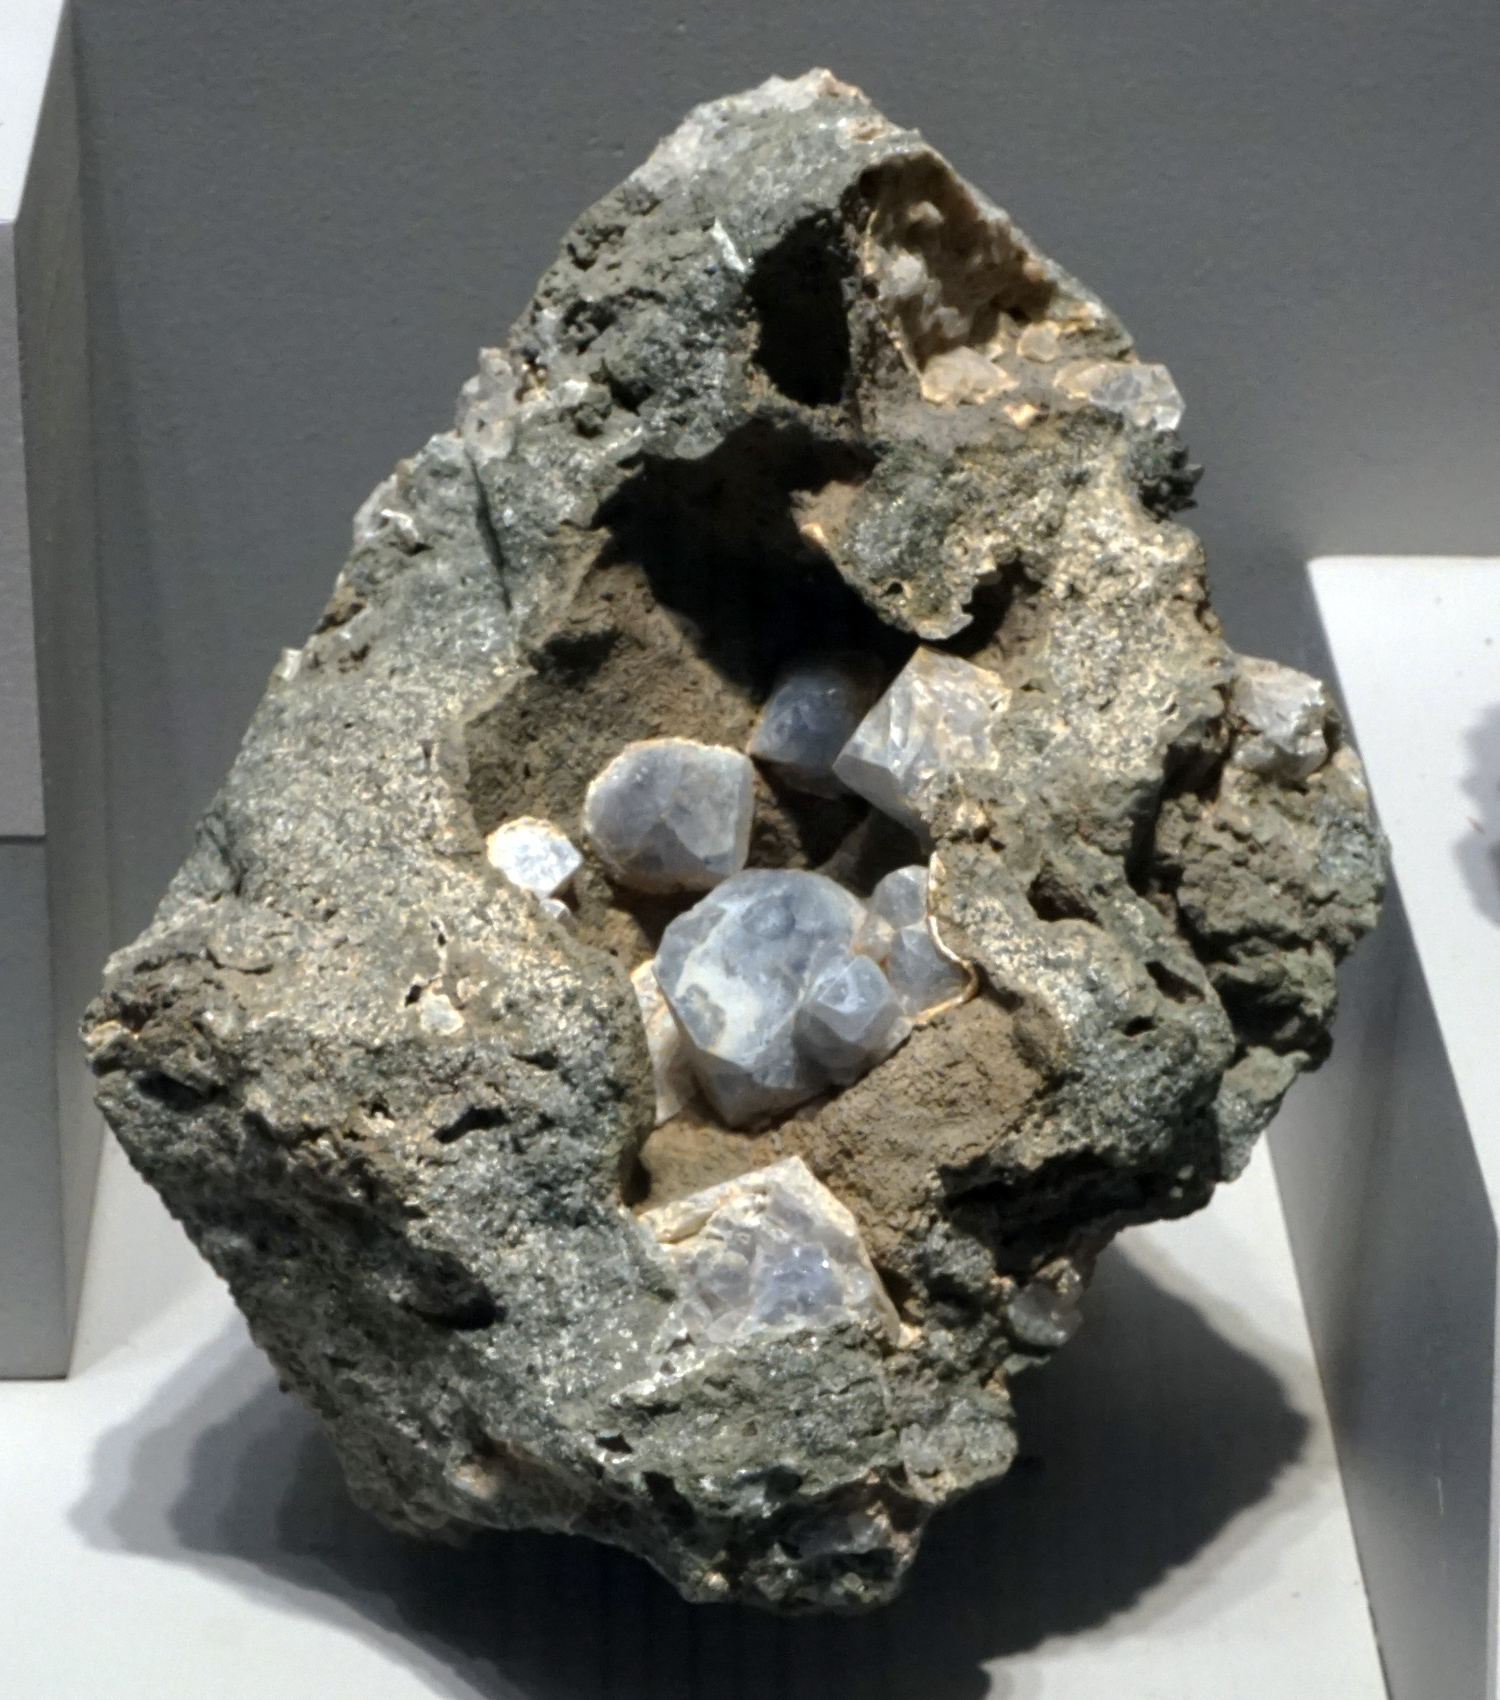 Hauyne Crystals in Matrix Pocket from Sacrofano, Latium, Italy